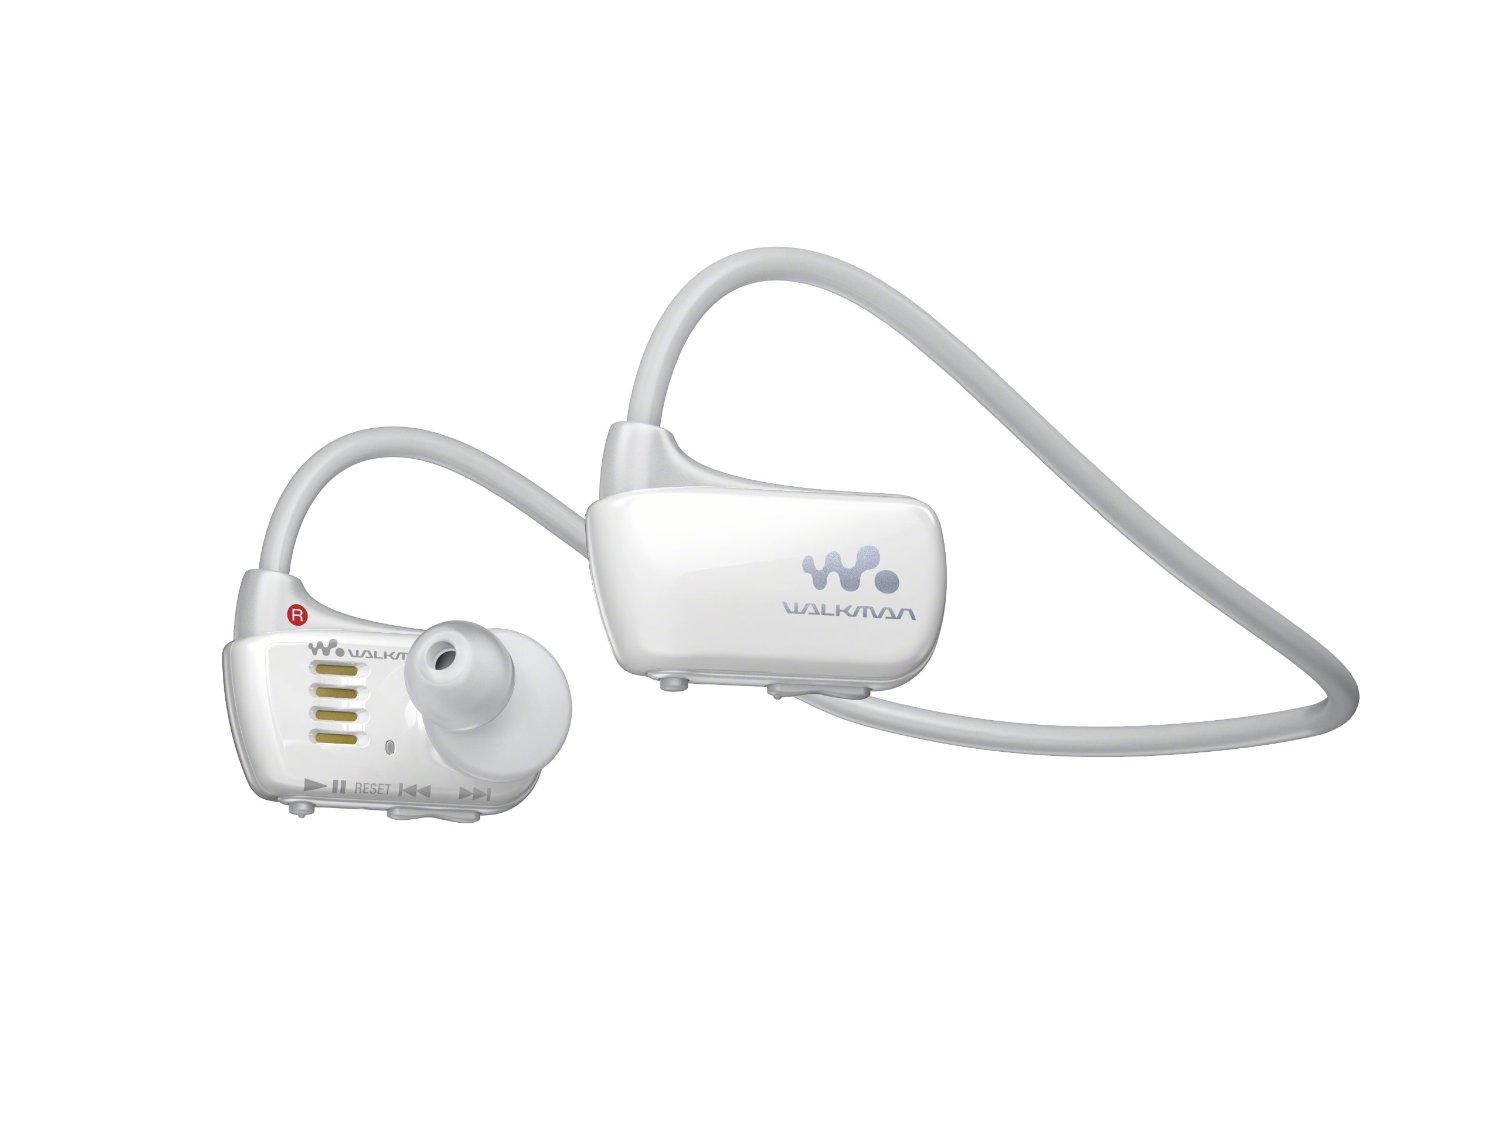 NWZW273S 4 Go Sport étanche lecteur MP3 Walkman Sony (blanc) av